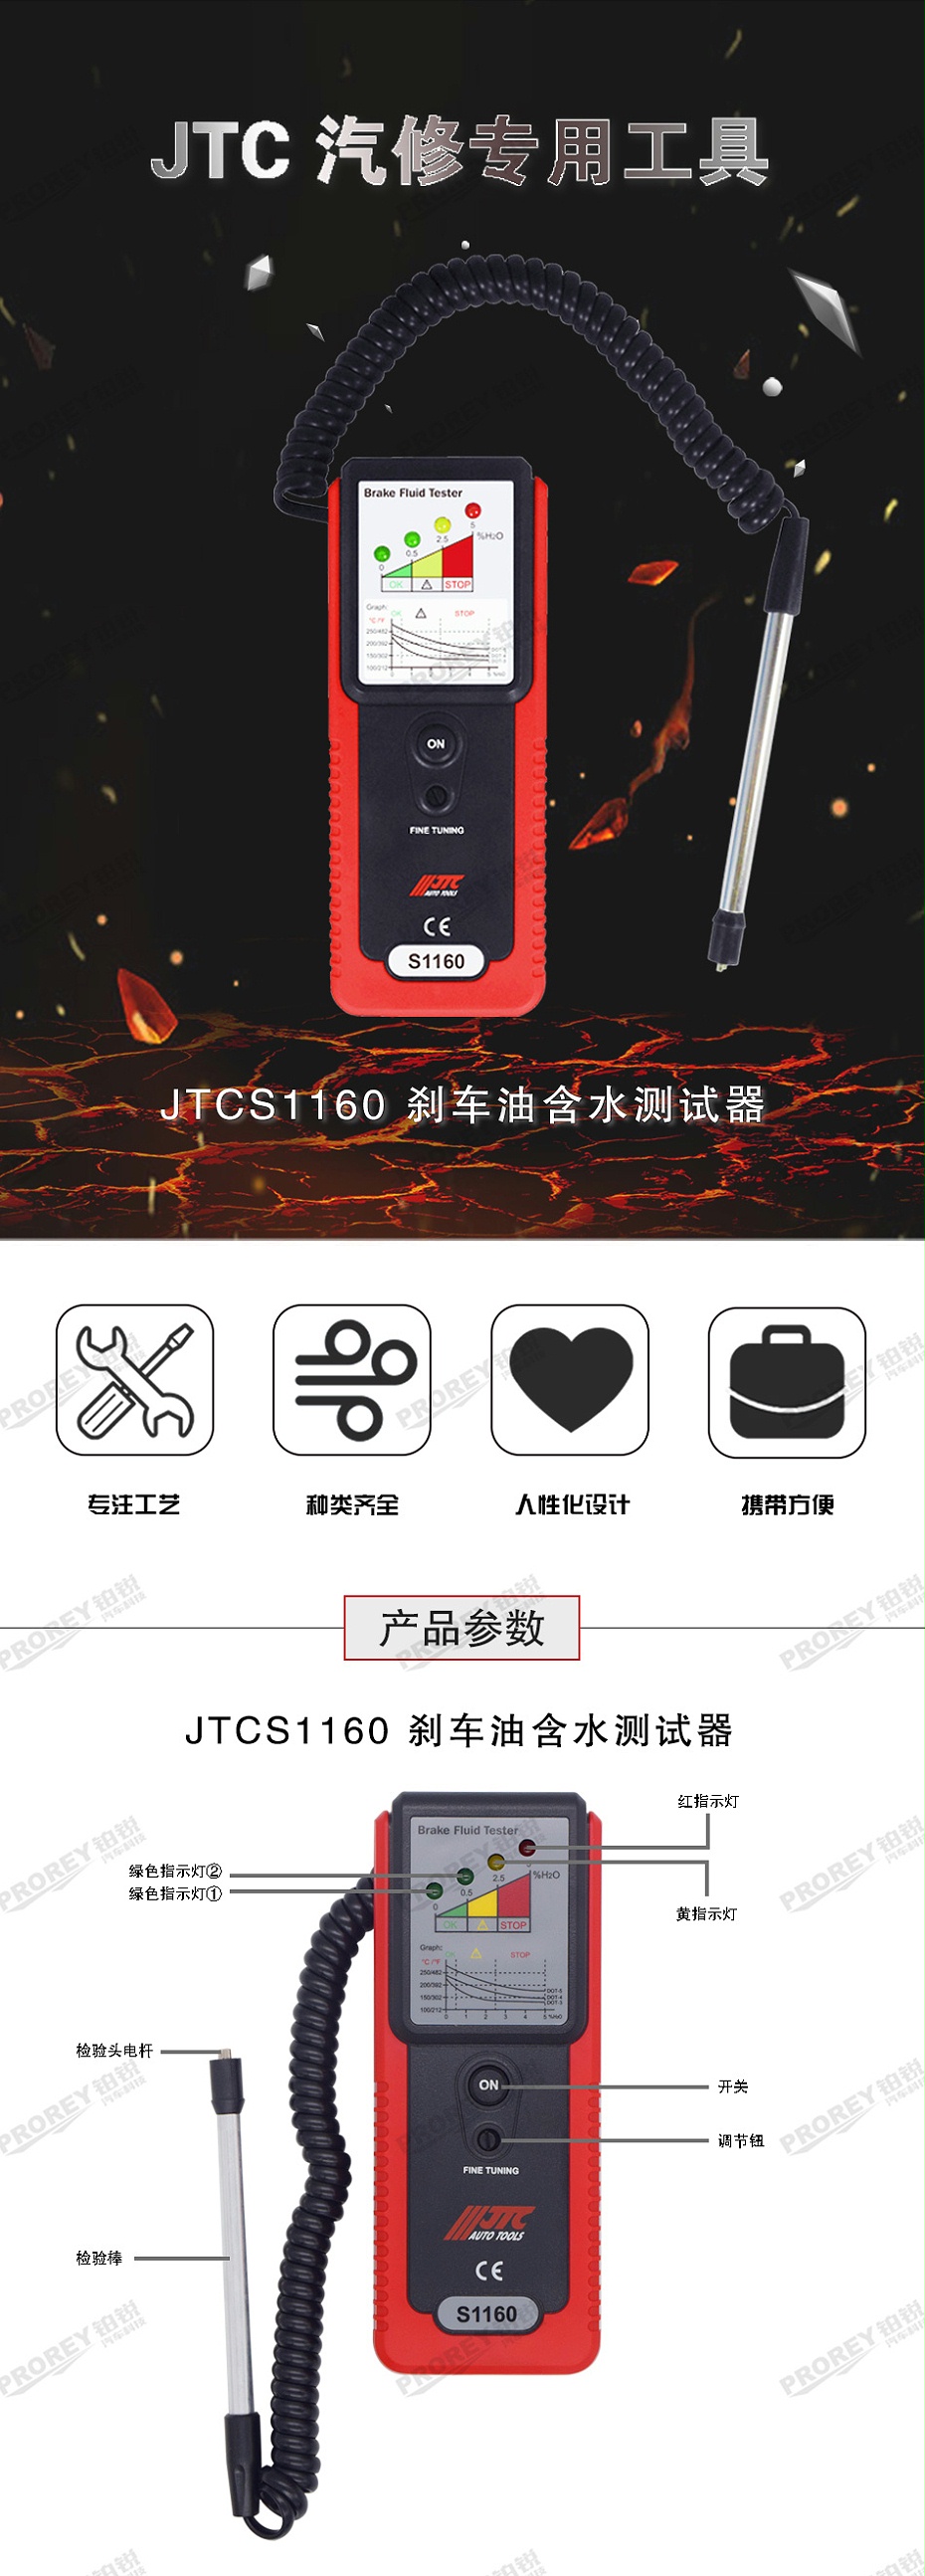 GW-120130008-JTCS1160-制动液检测工具-1